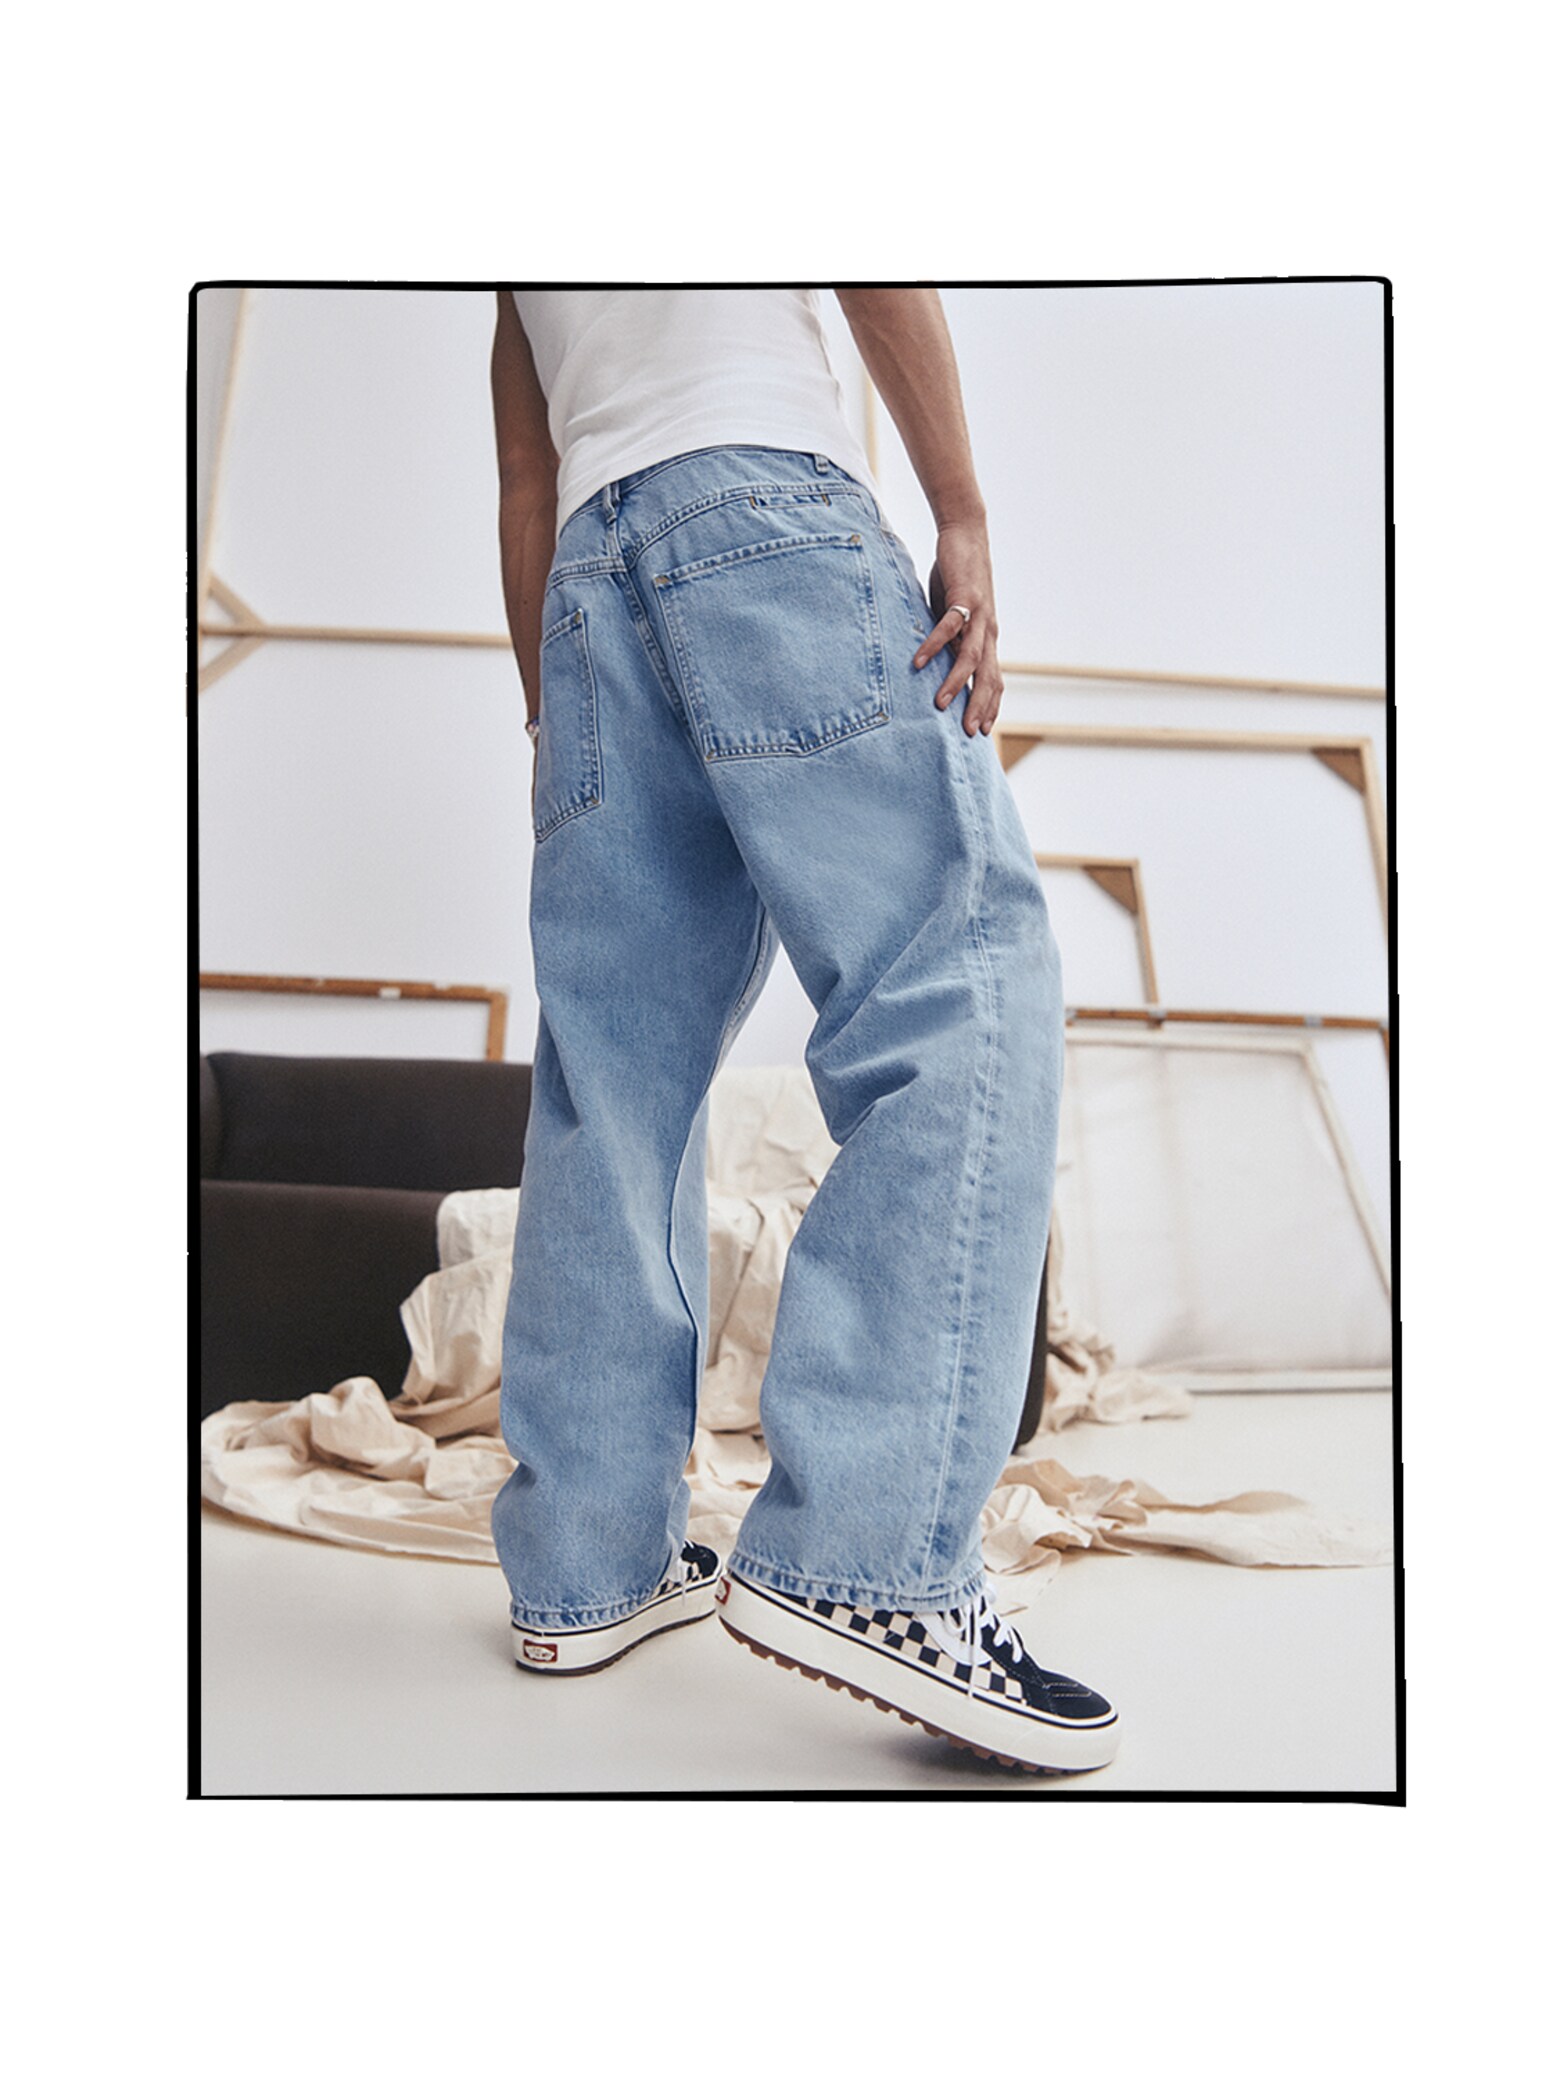 Cestmir - Loose Jeans Look